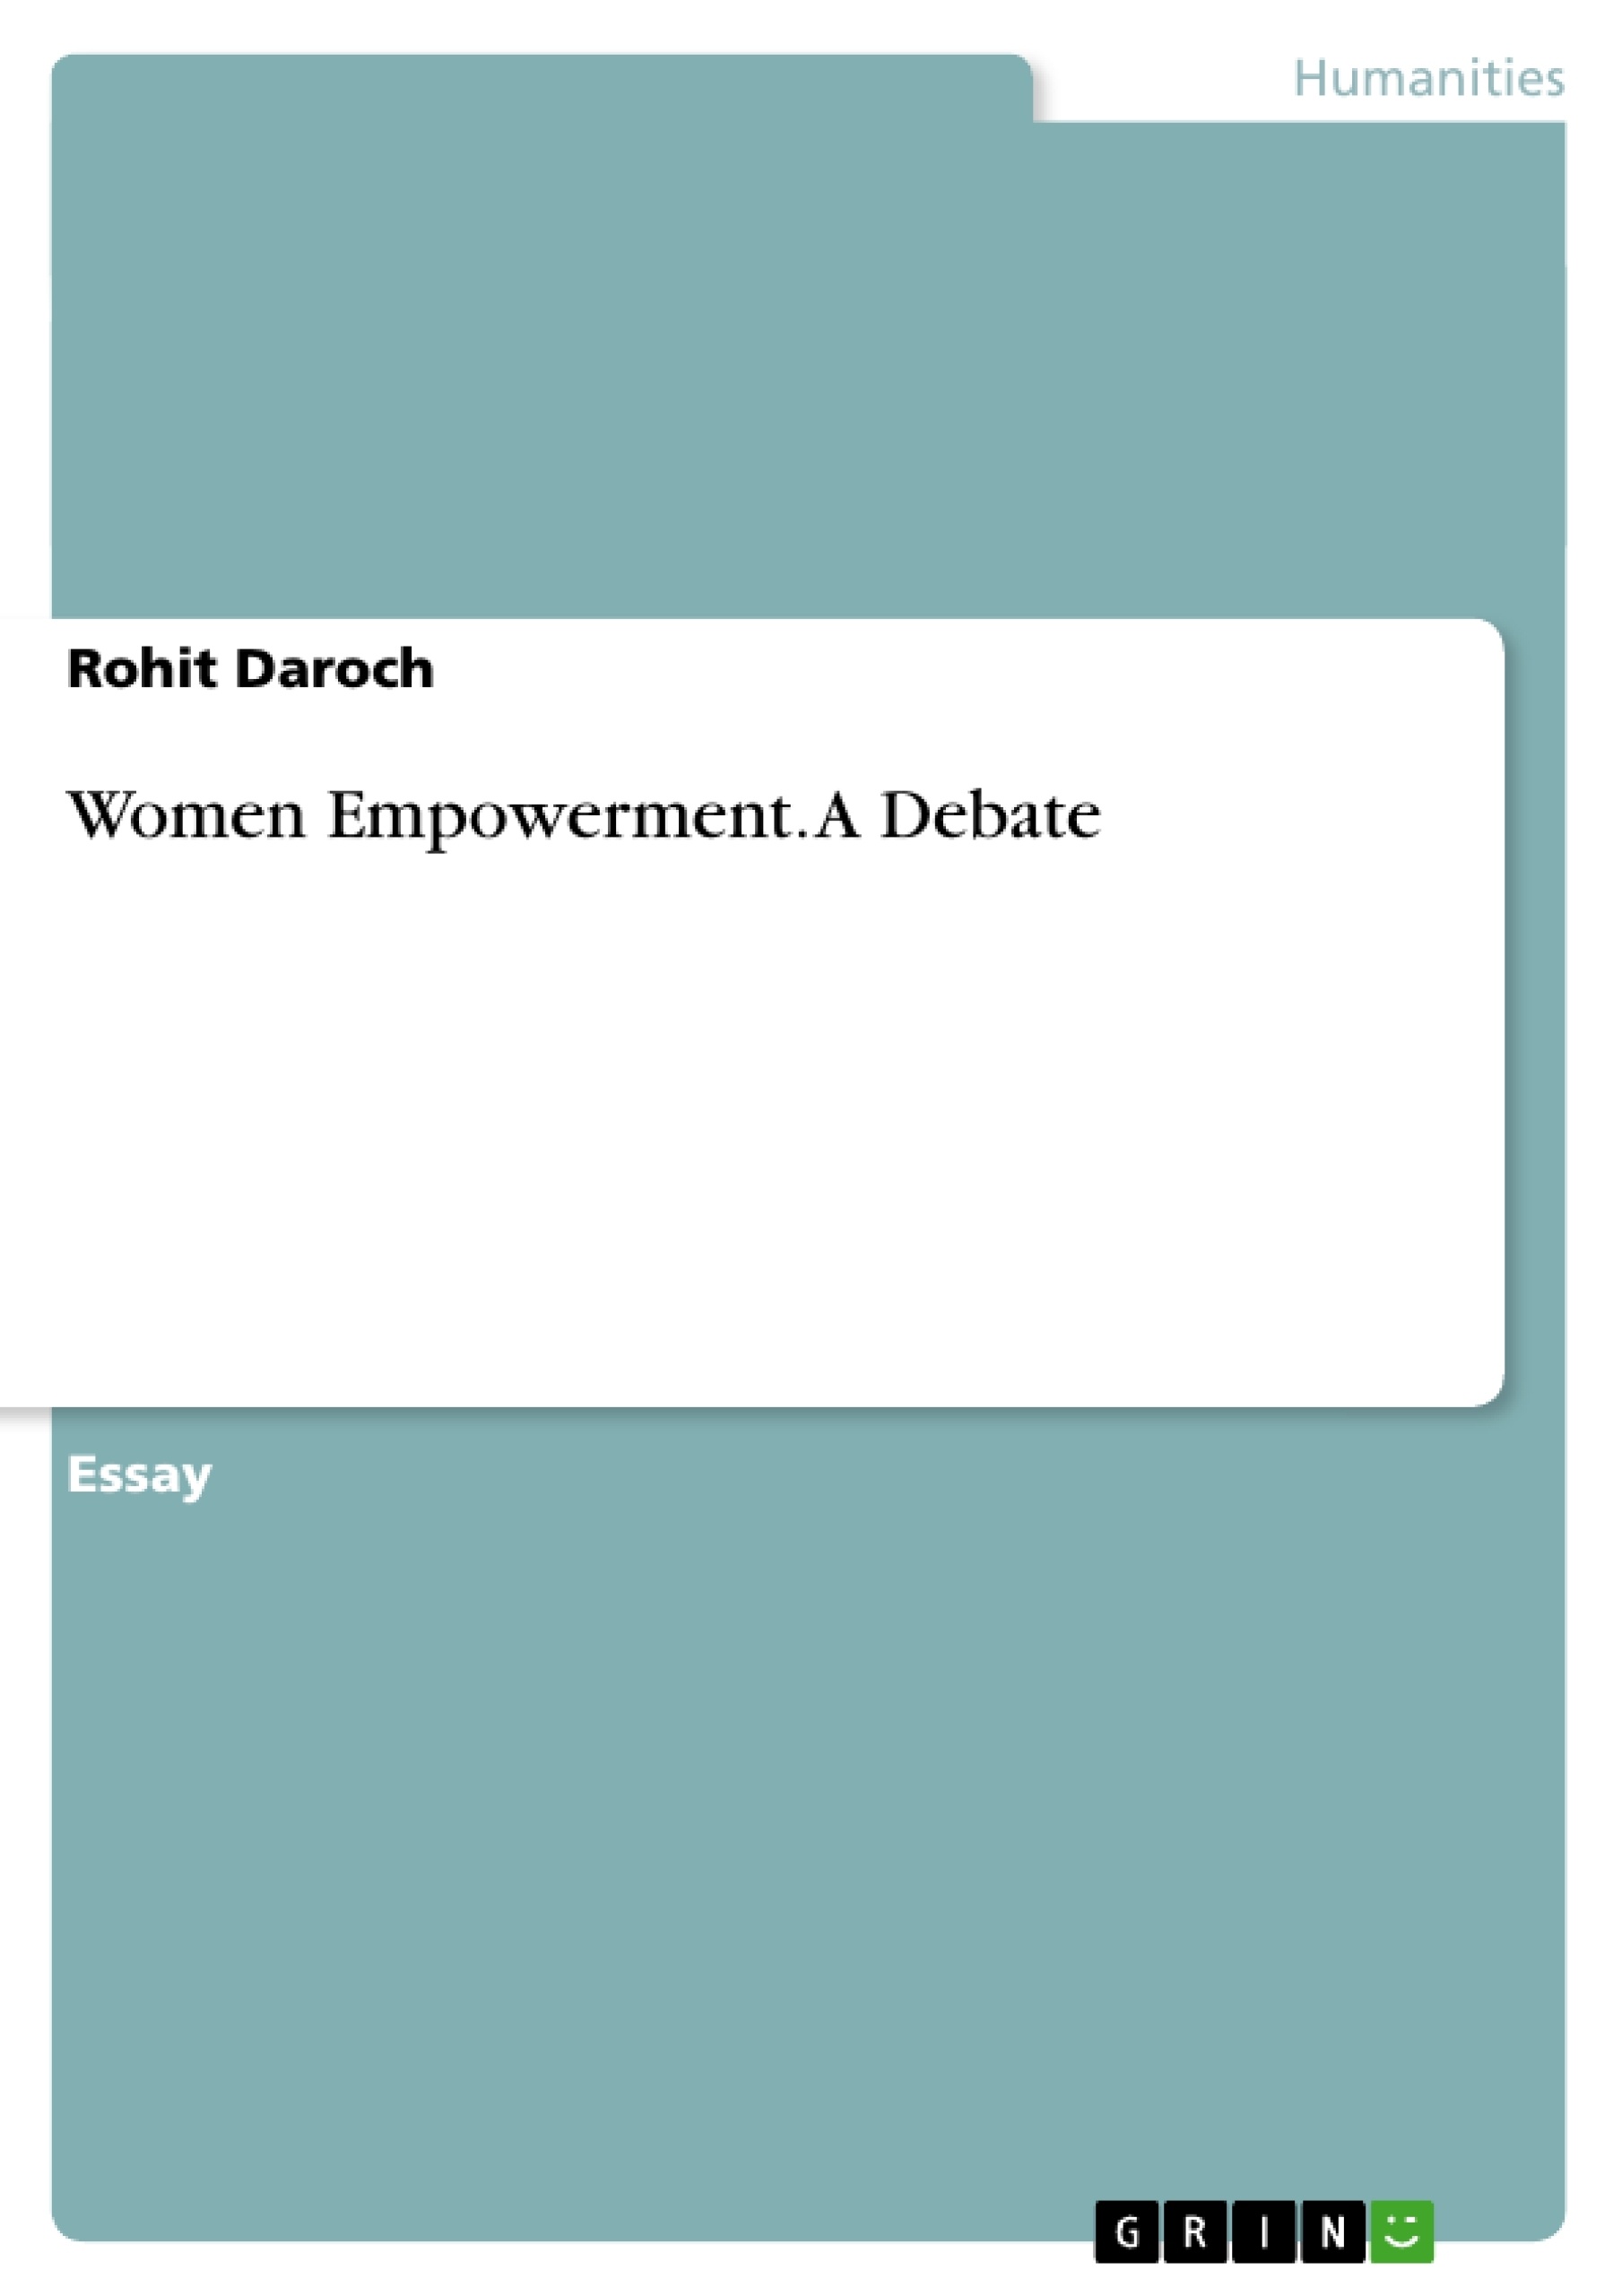 topics related to women empowerment